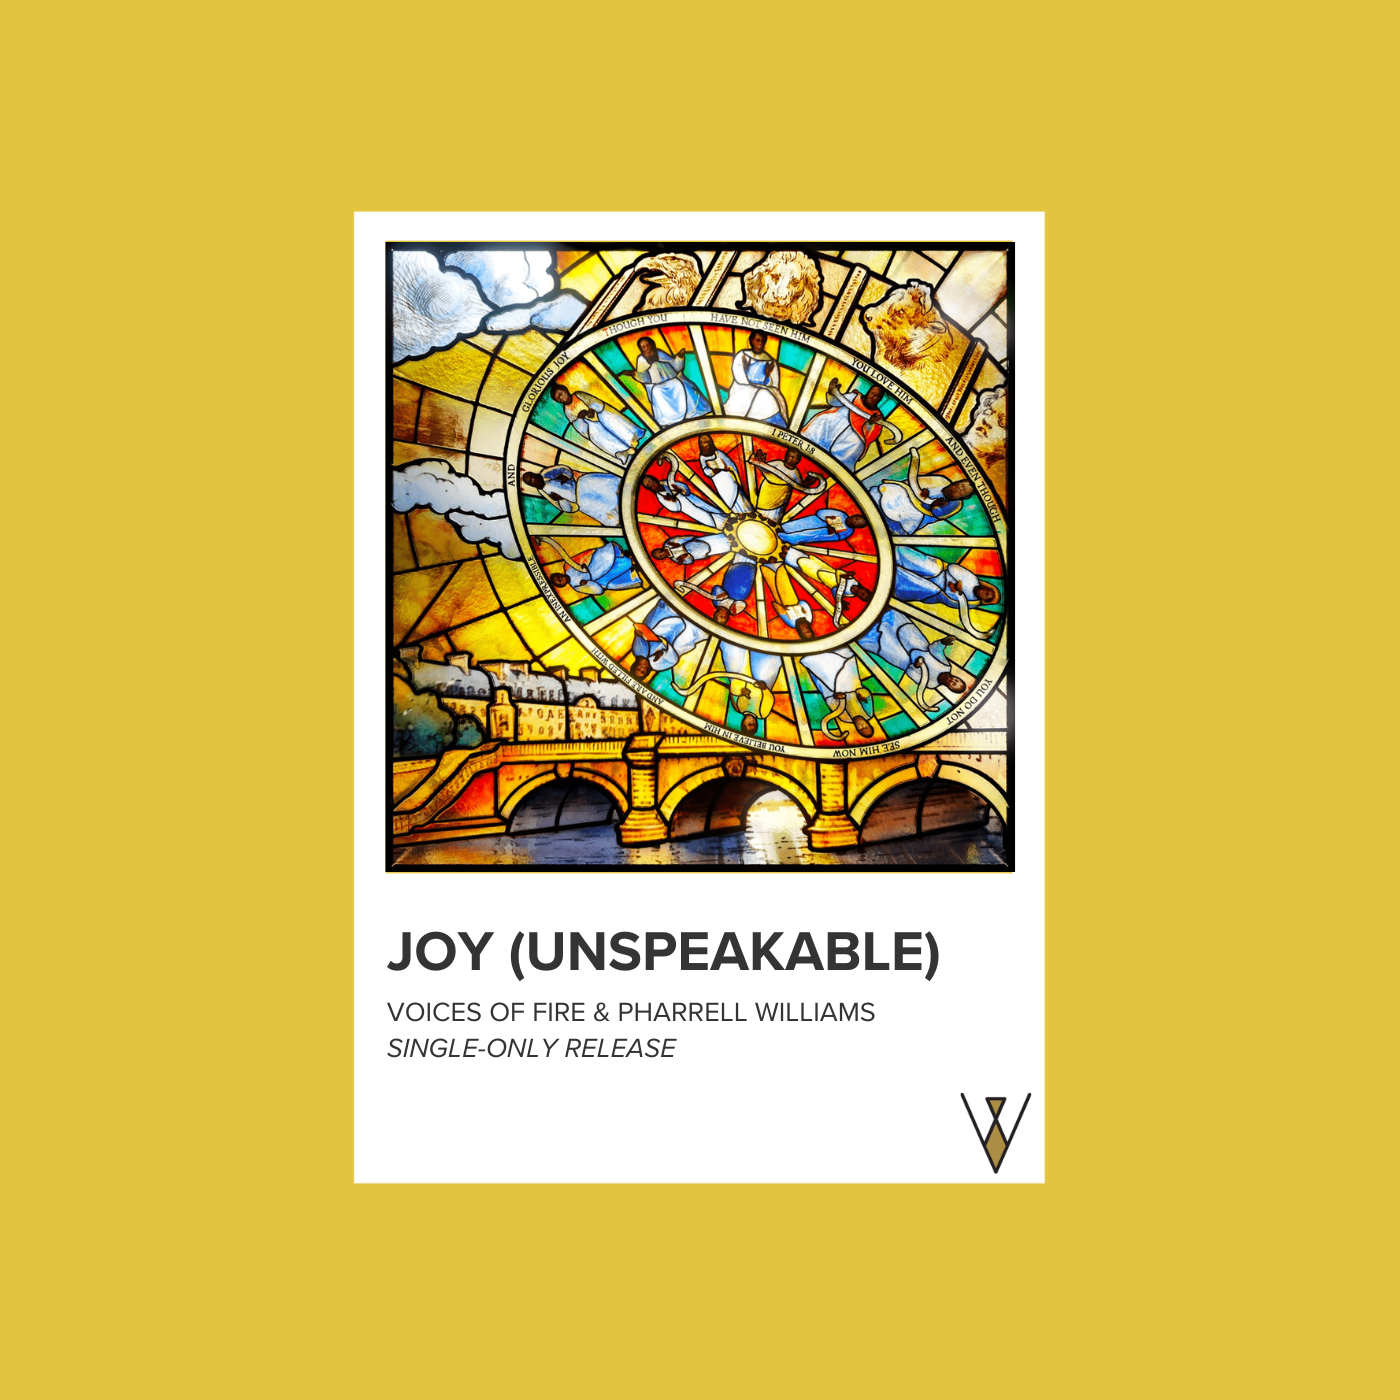 9. "JOY (Unspeakable)"